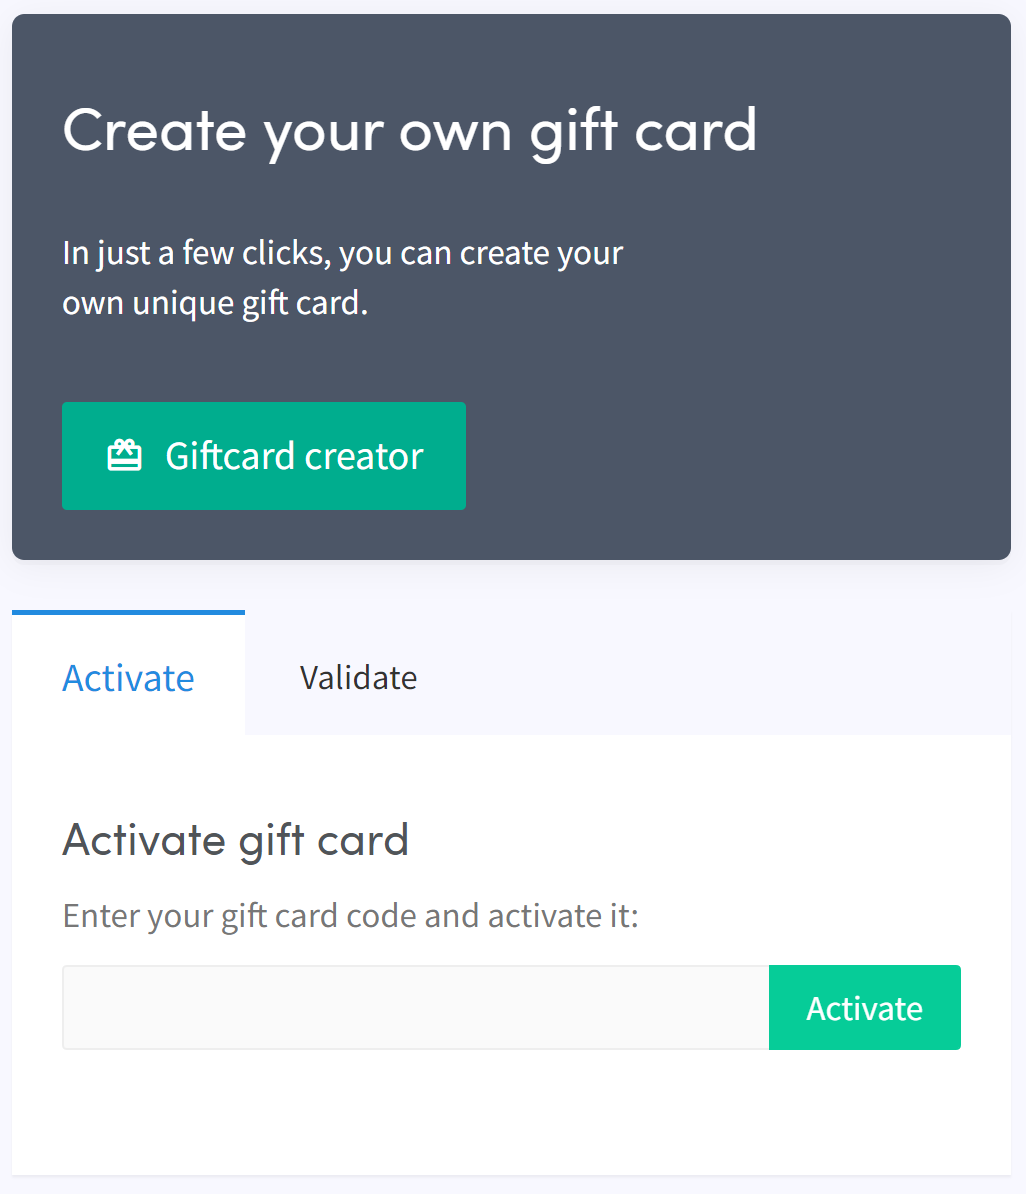 giftcard creator